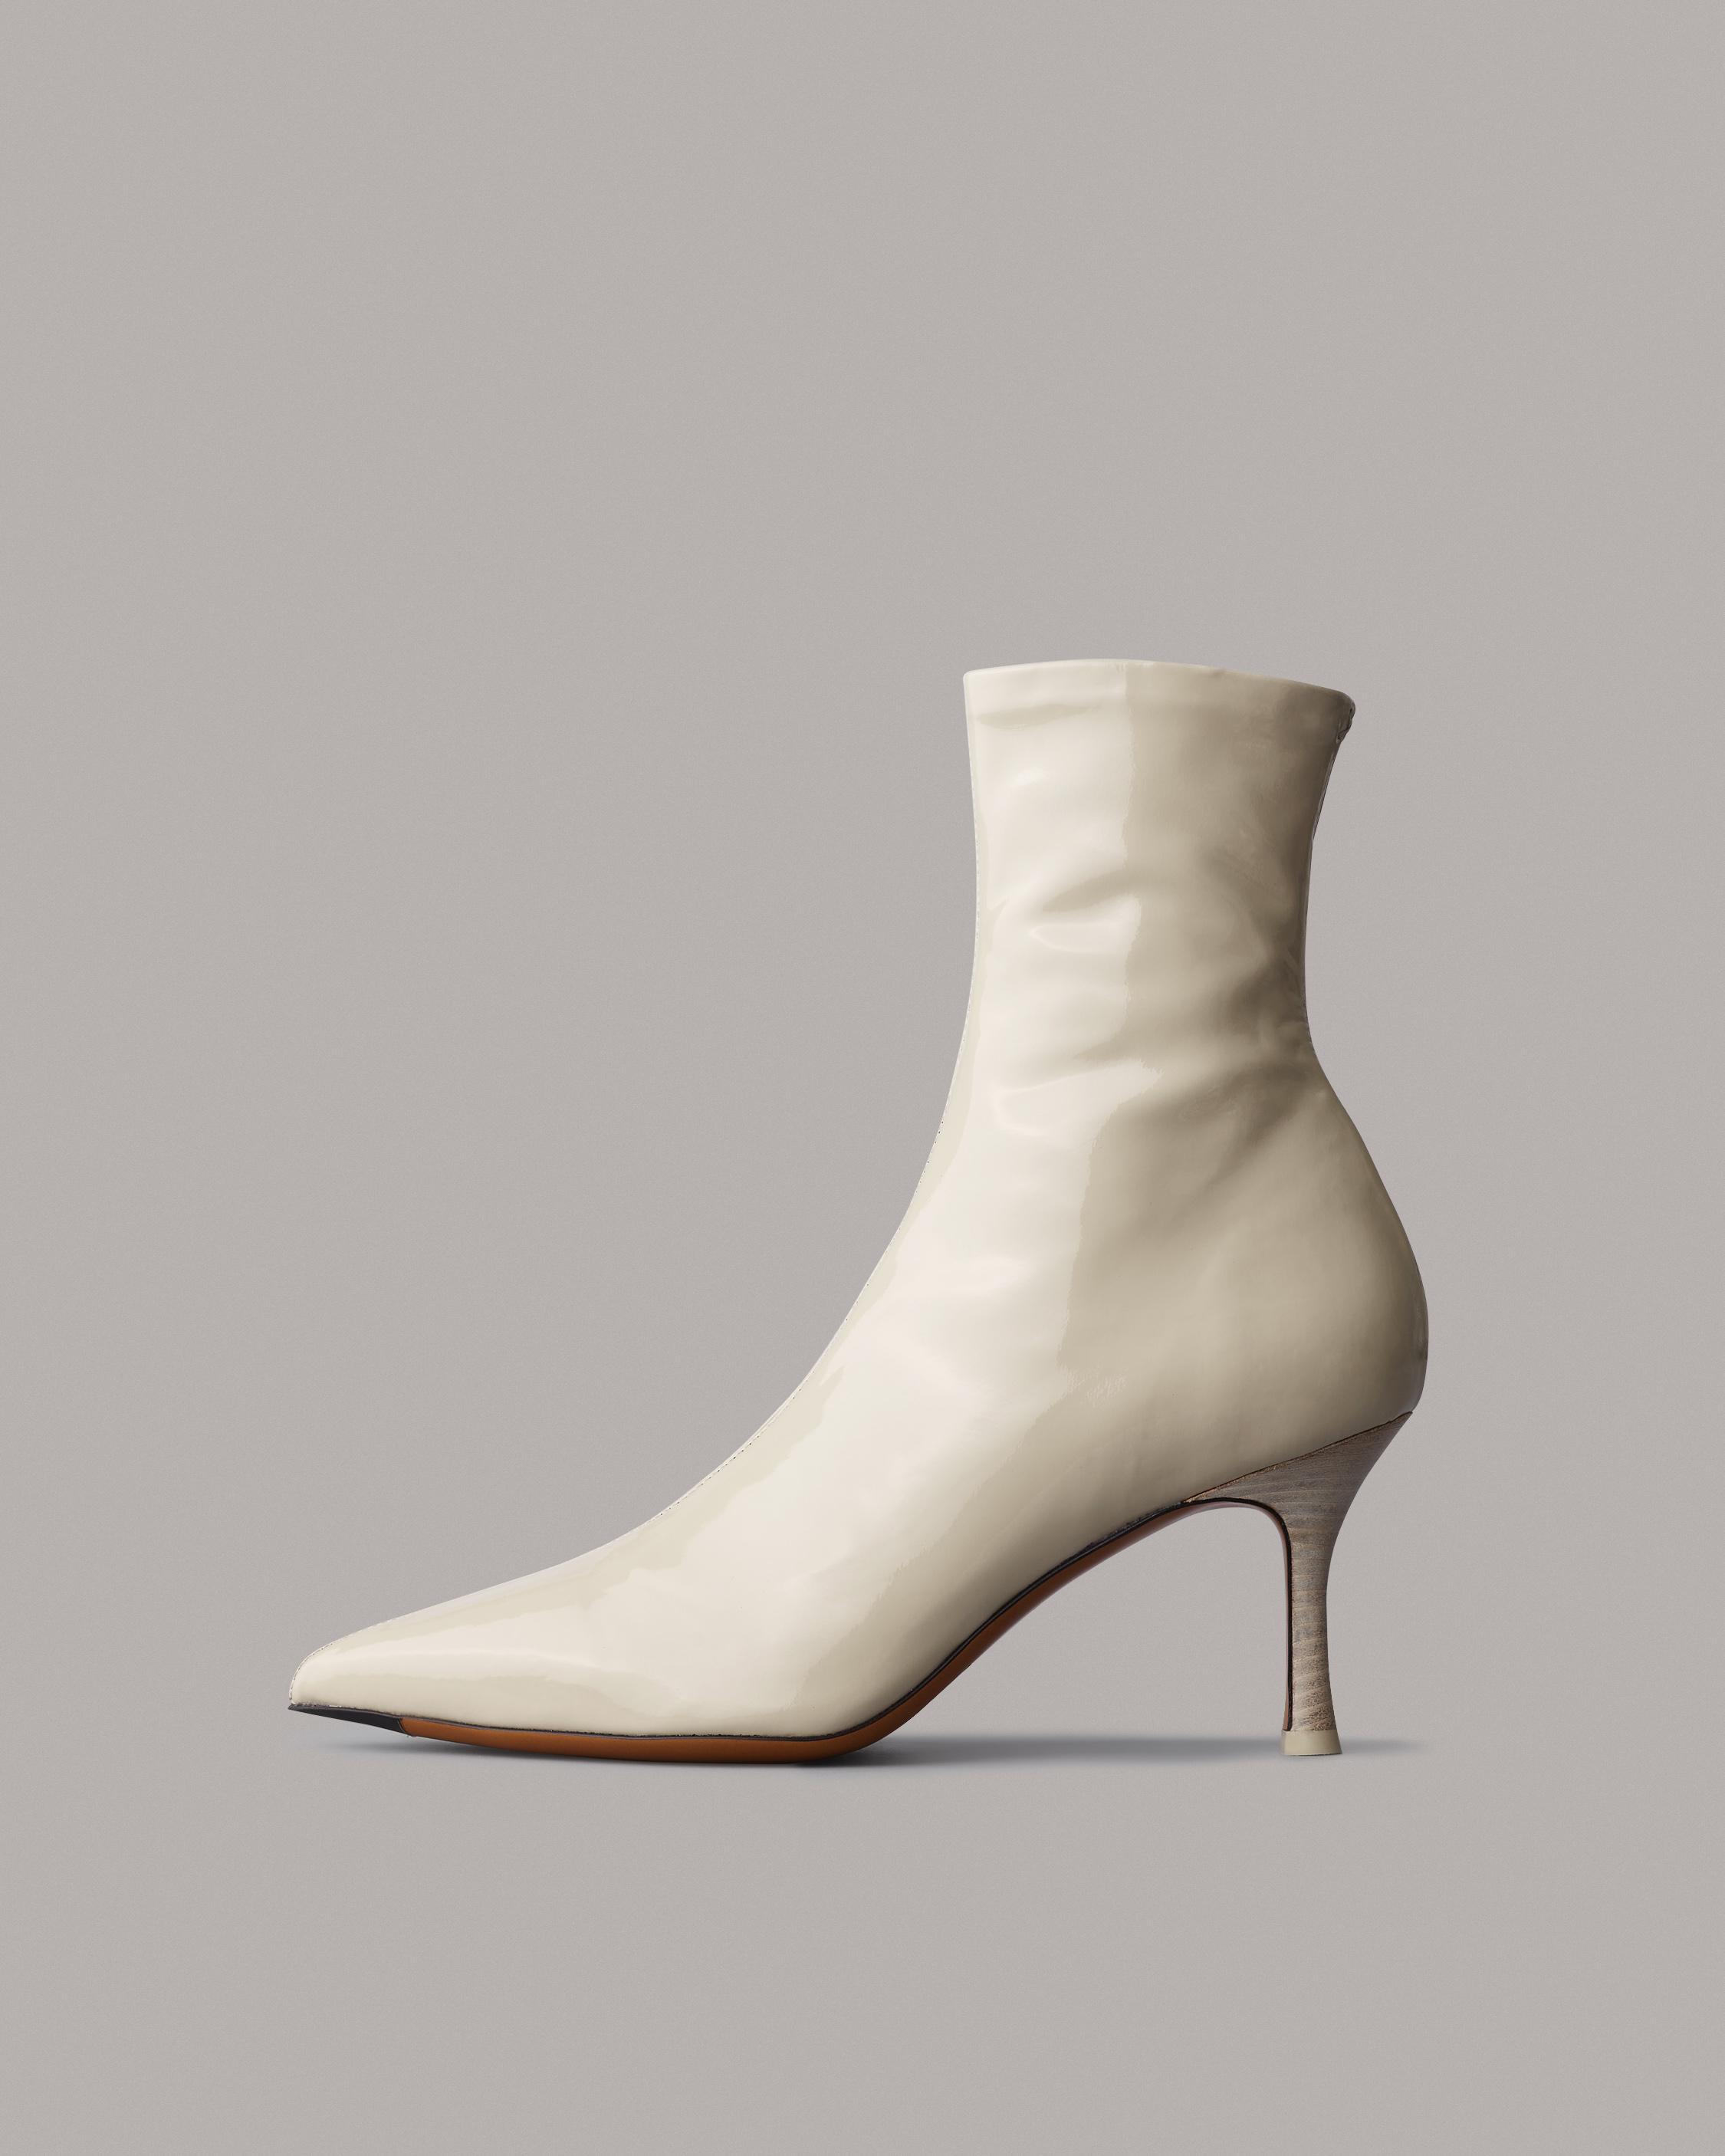 Shoes for Women with an Urban Edge | rag & bone